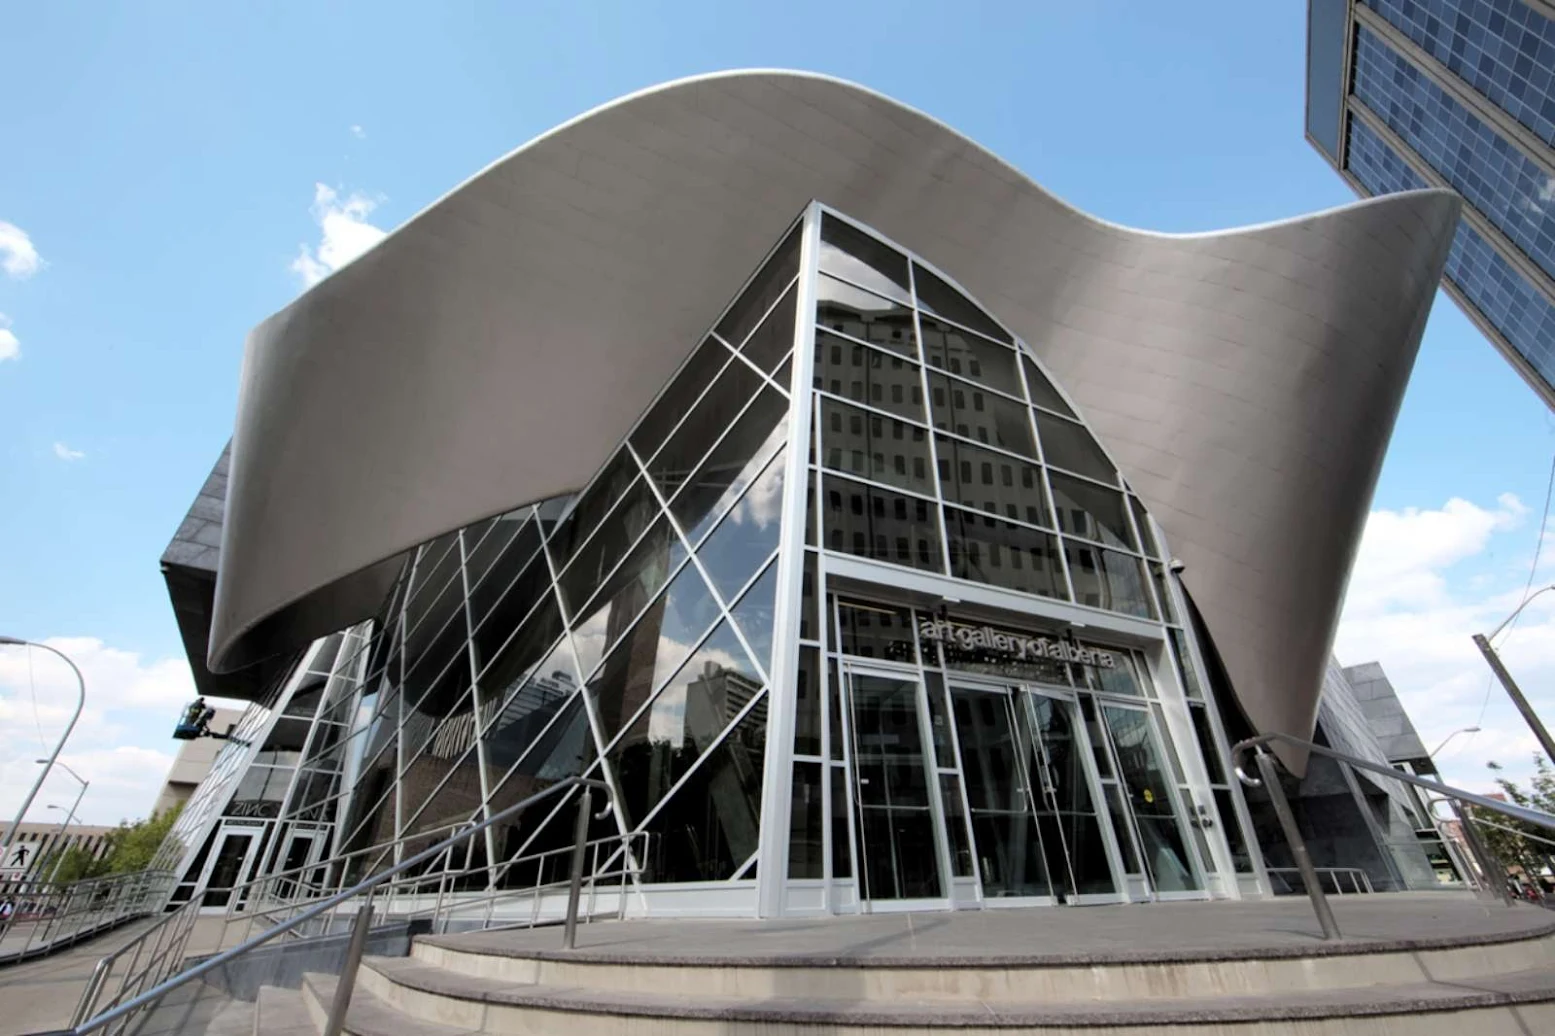 Art Gallery of Alberta by Randall Stout Architects